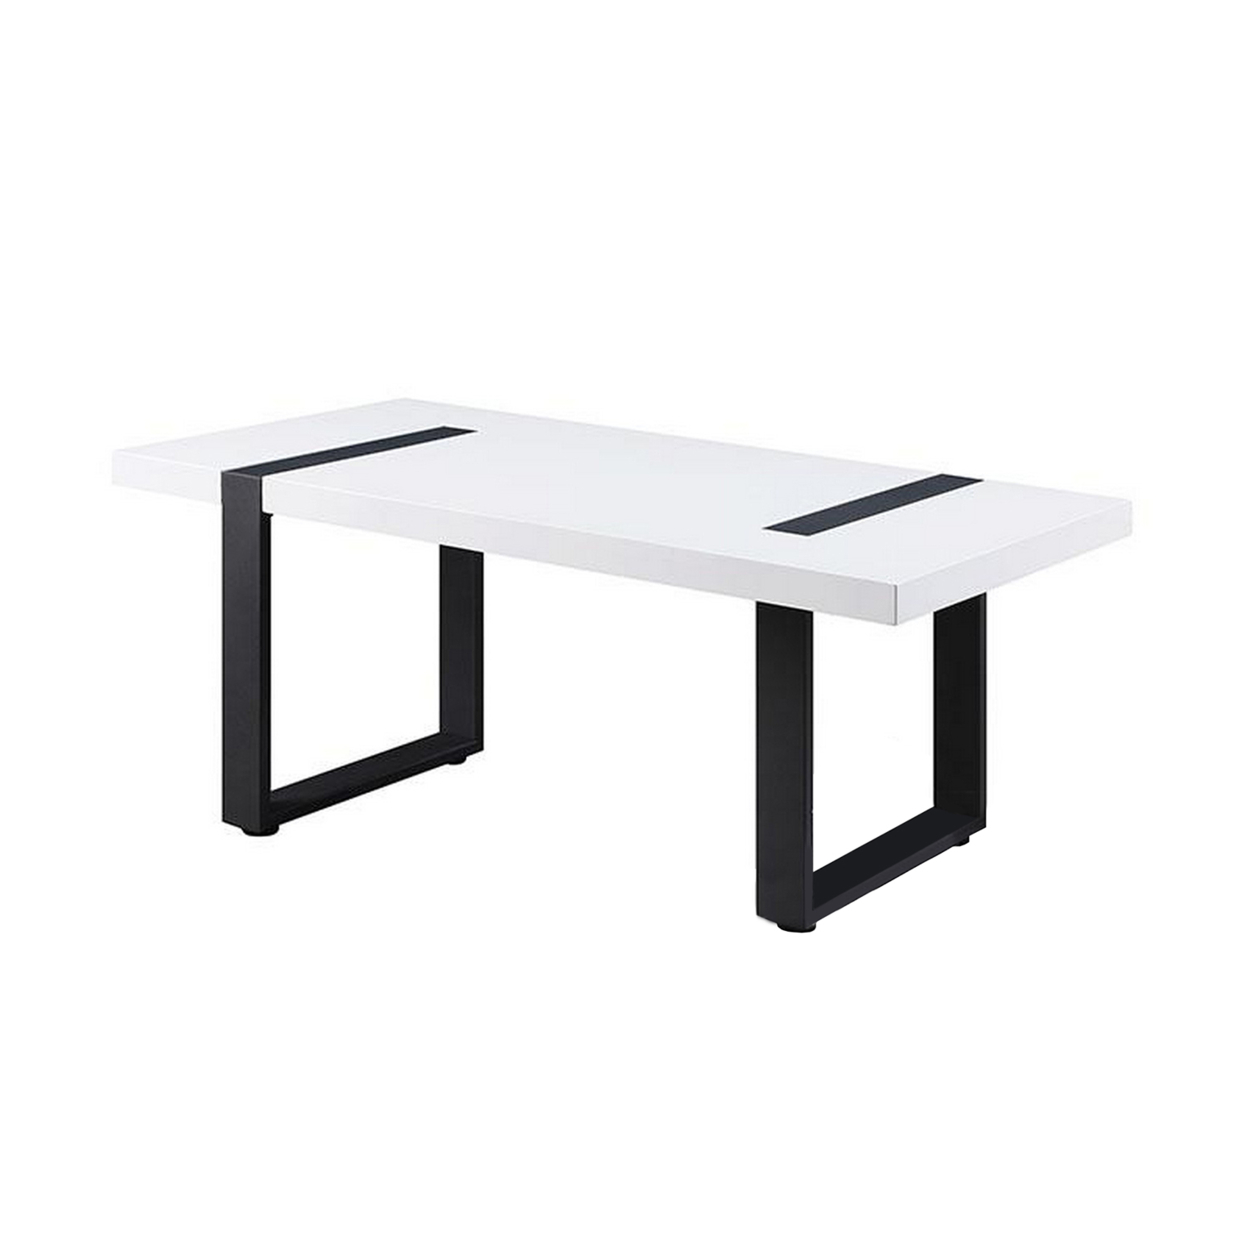 Two Tone Modern Coffee Table With Metal Legs, White And Black- Saltoro Sherpi